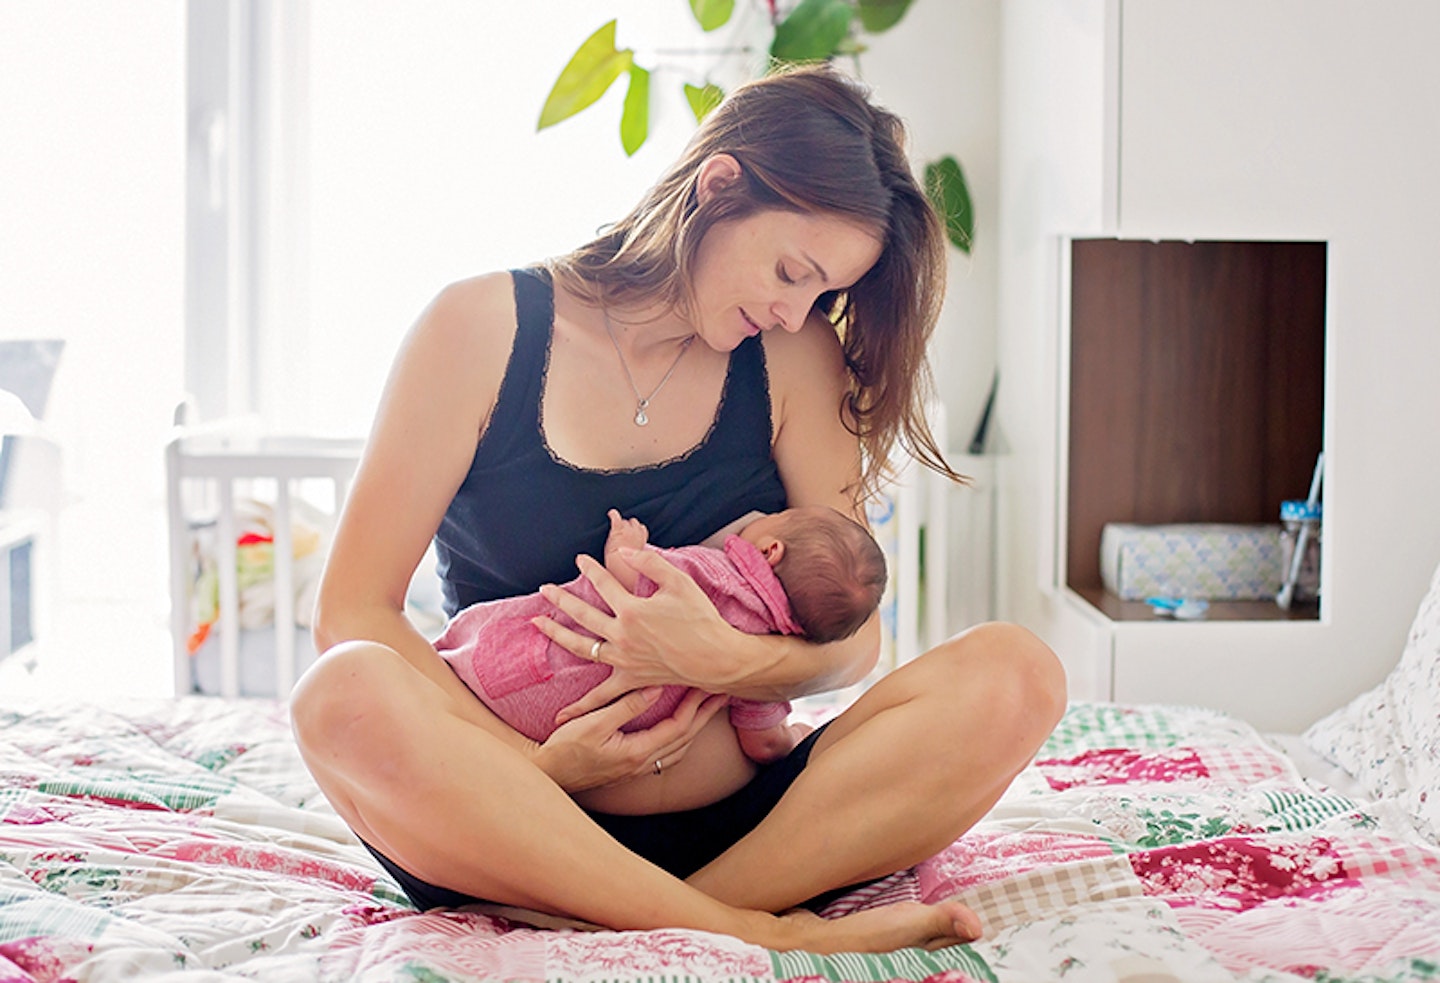 https://images.bauerhosting.com/affiliates/sites/12/motherandbaby/legacy/root/breastfeeding8.jpg?ar=16%3A9&fit=crop&crop=top&auto=format&w=1440&q=80